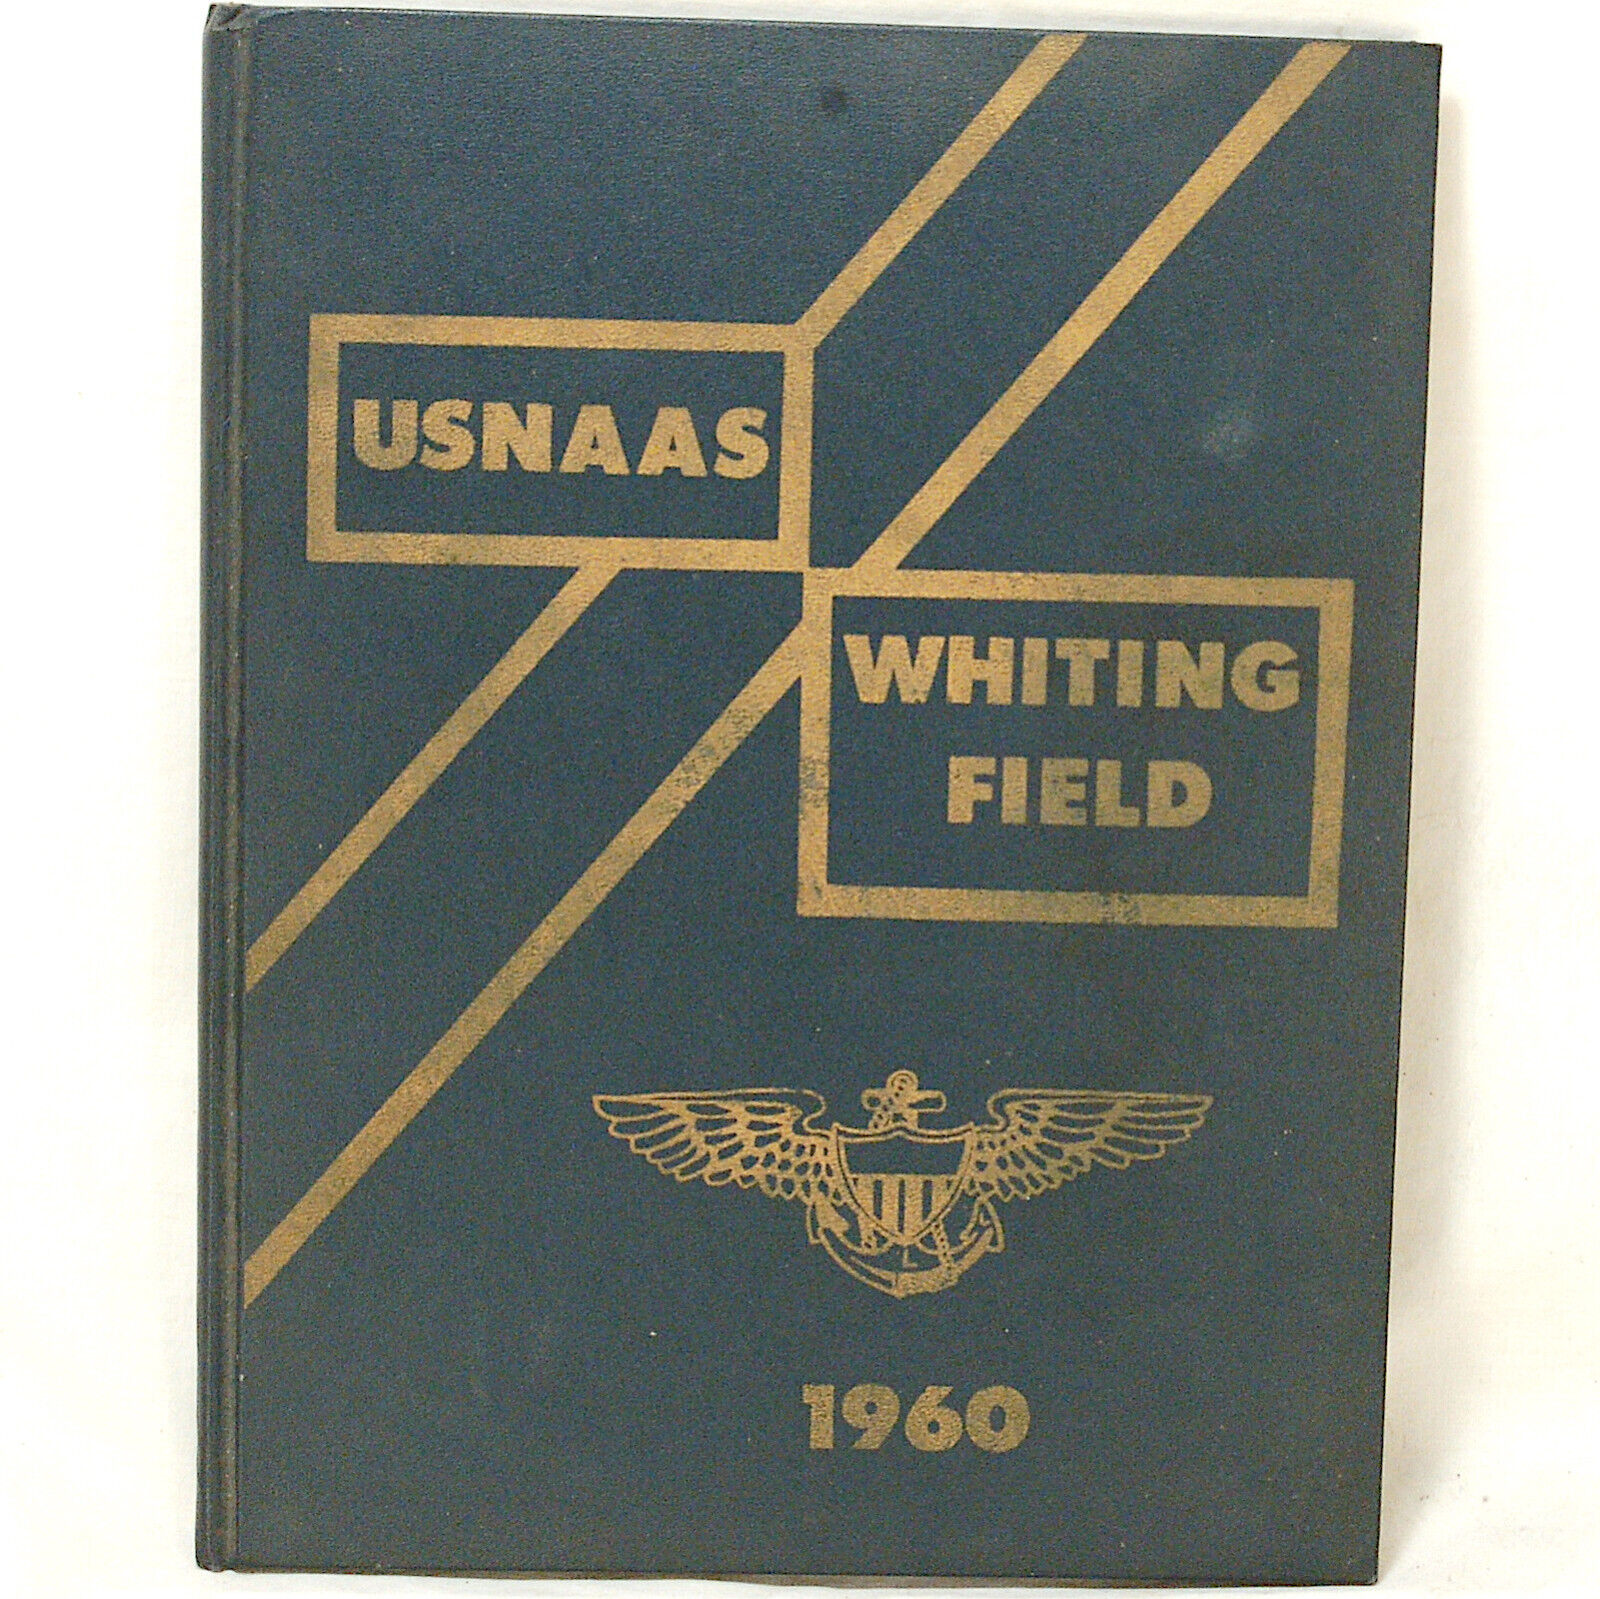 1960 U.S. Navy Cruise Book of USNAAS Whiting Field